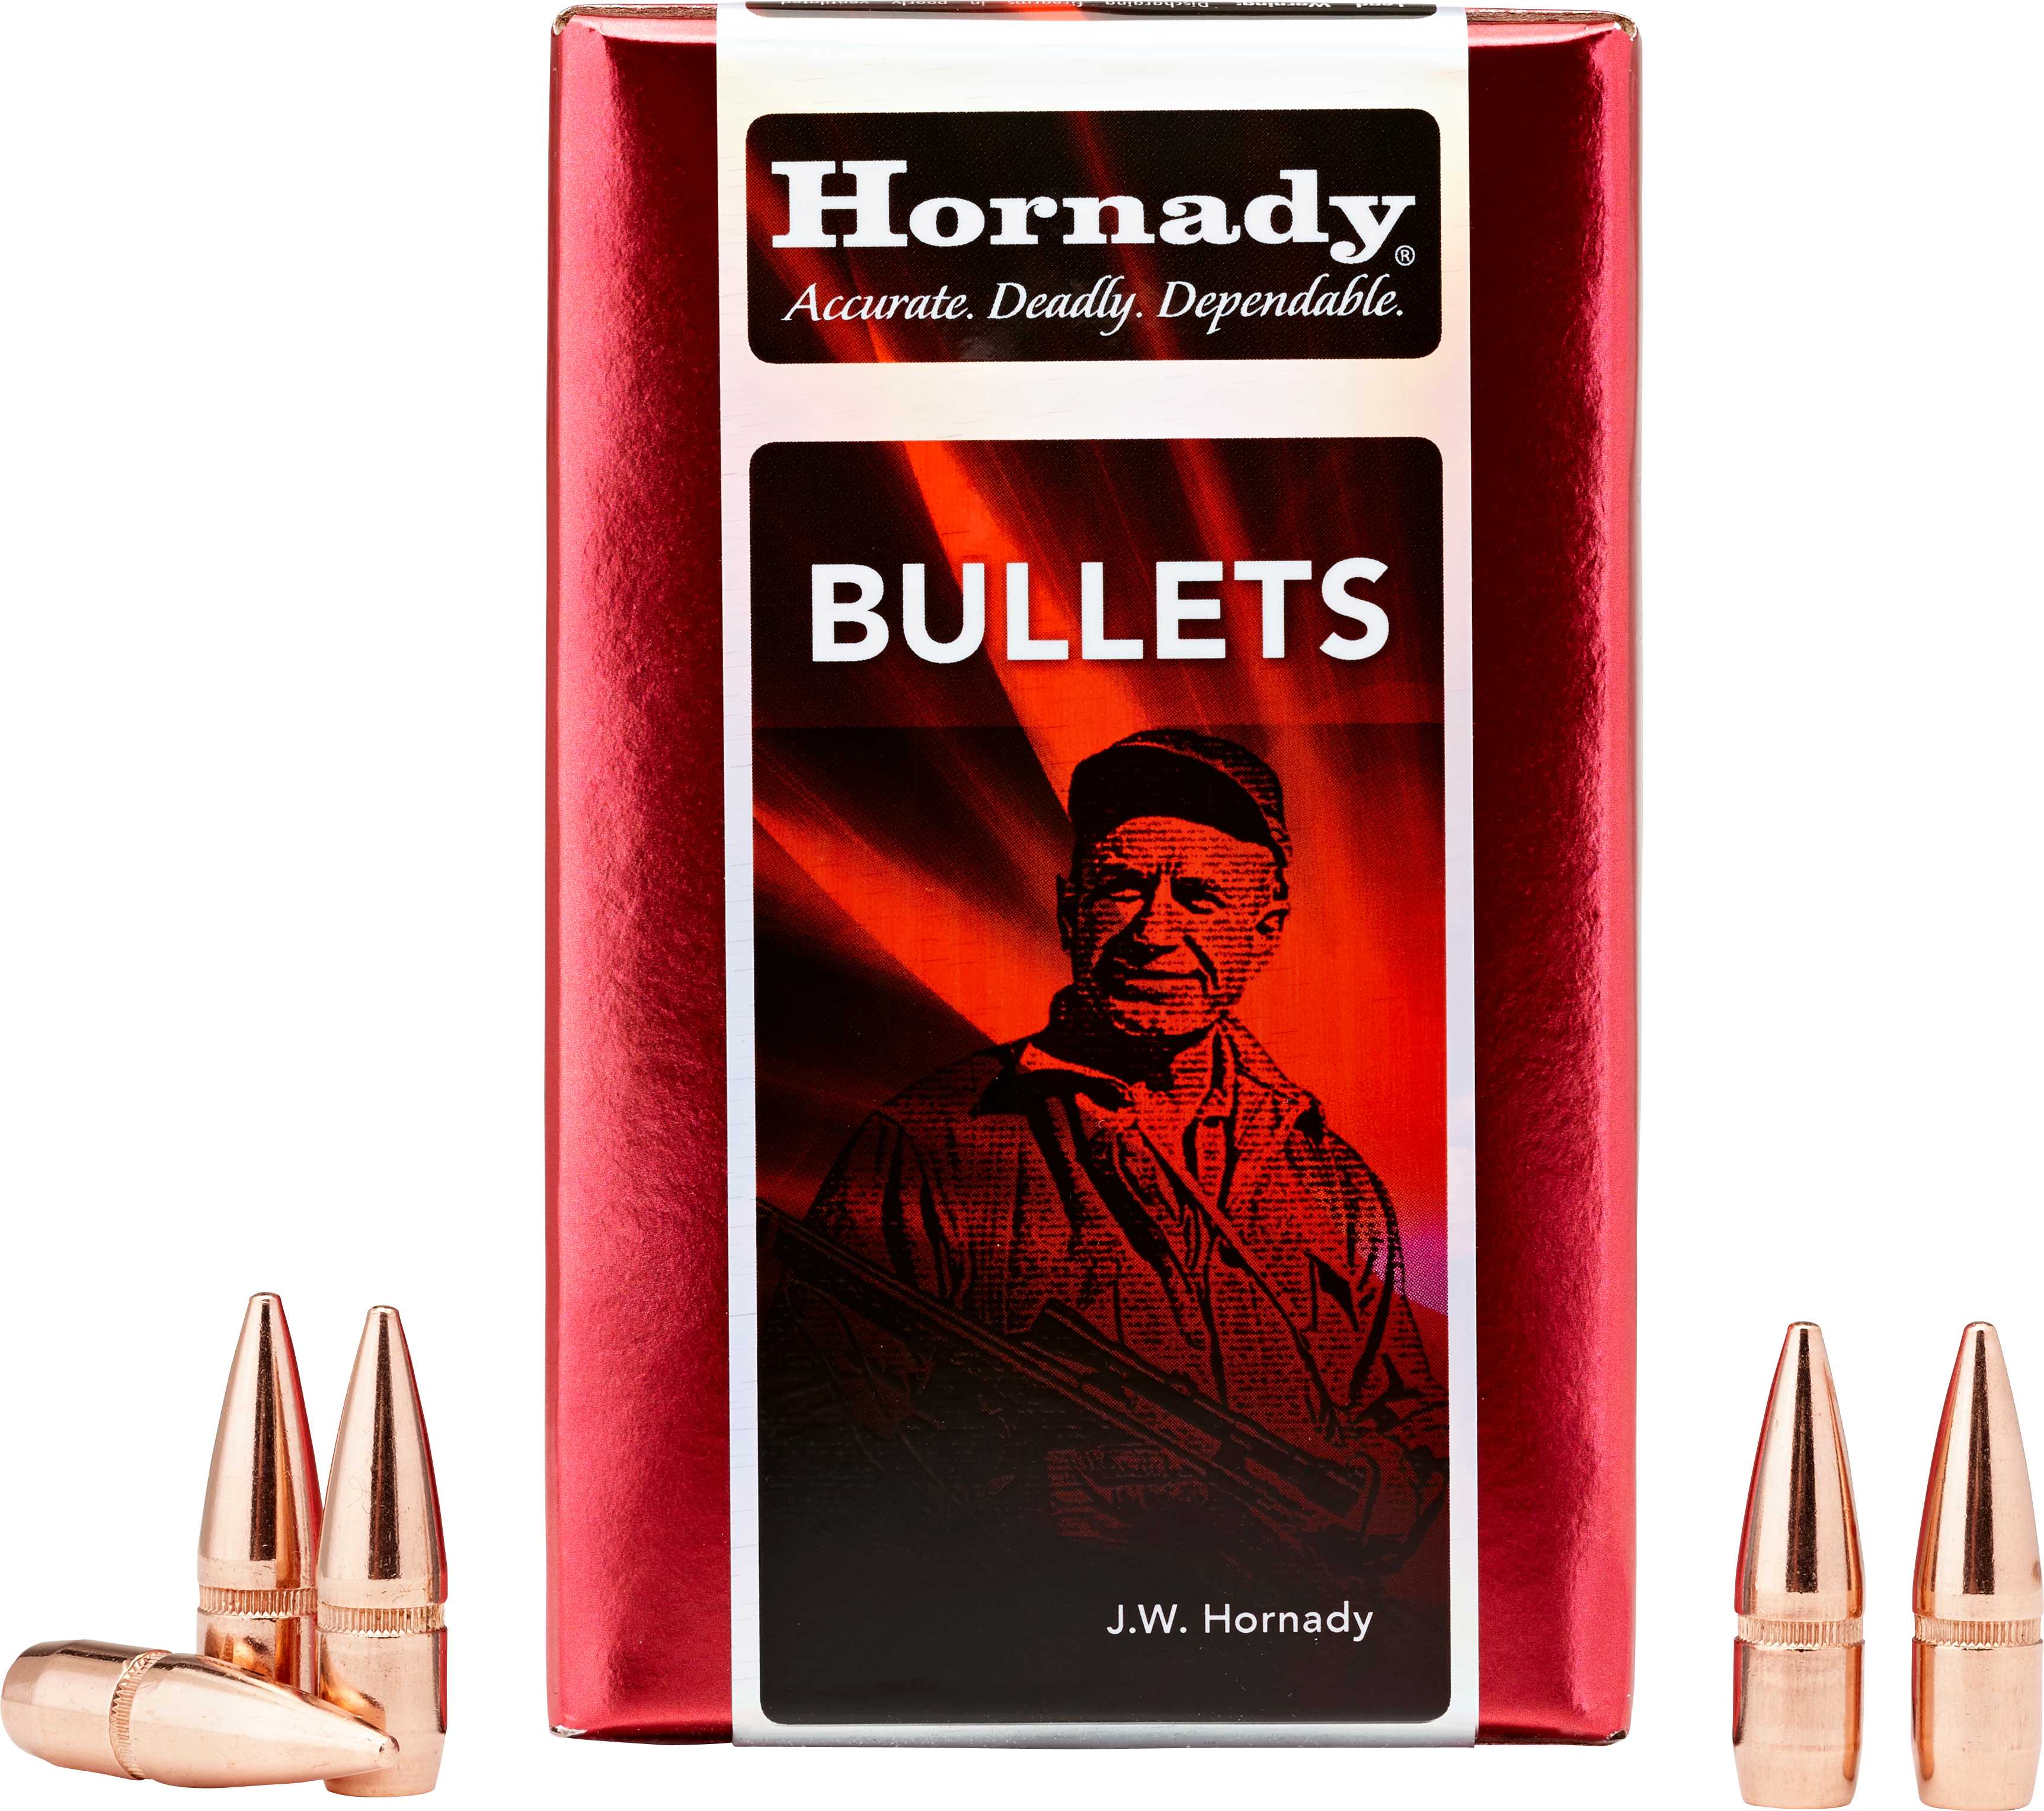 Hornady 375 Caliber InterLock Bullets 270 Grain SP-RP (Per 50) 3711